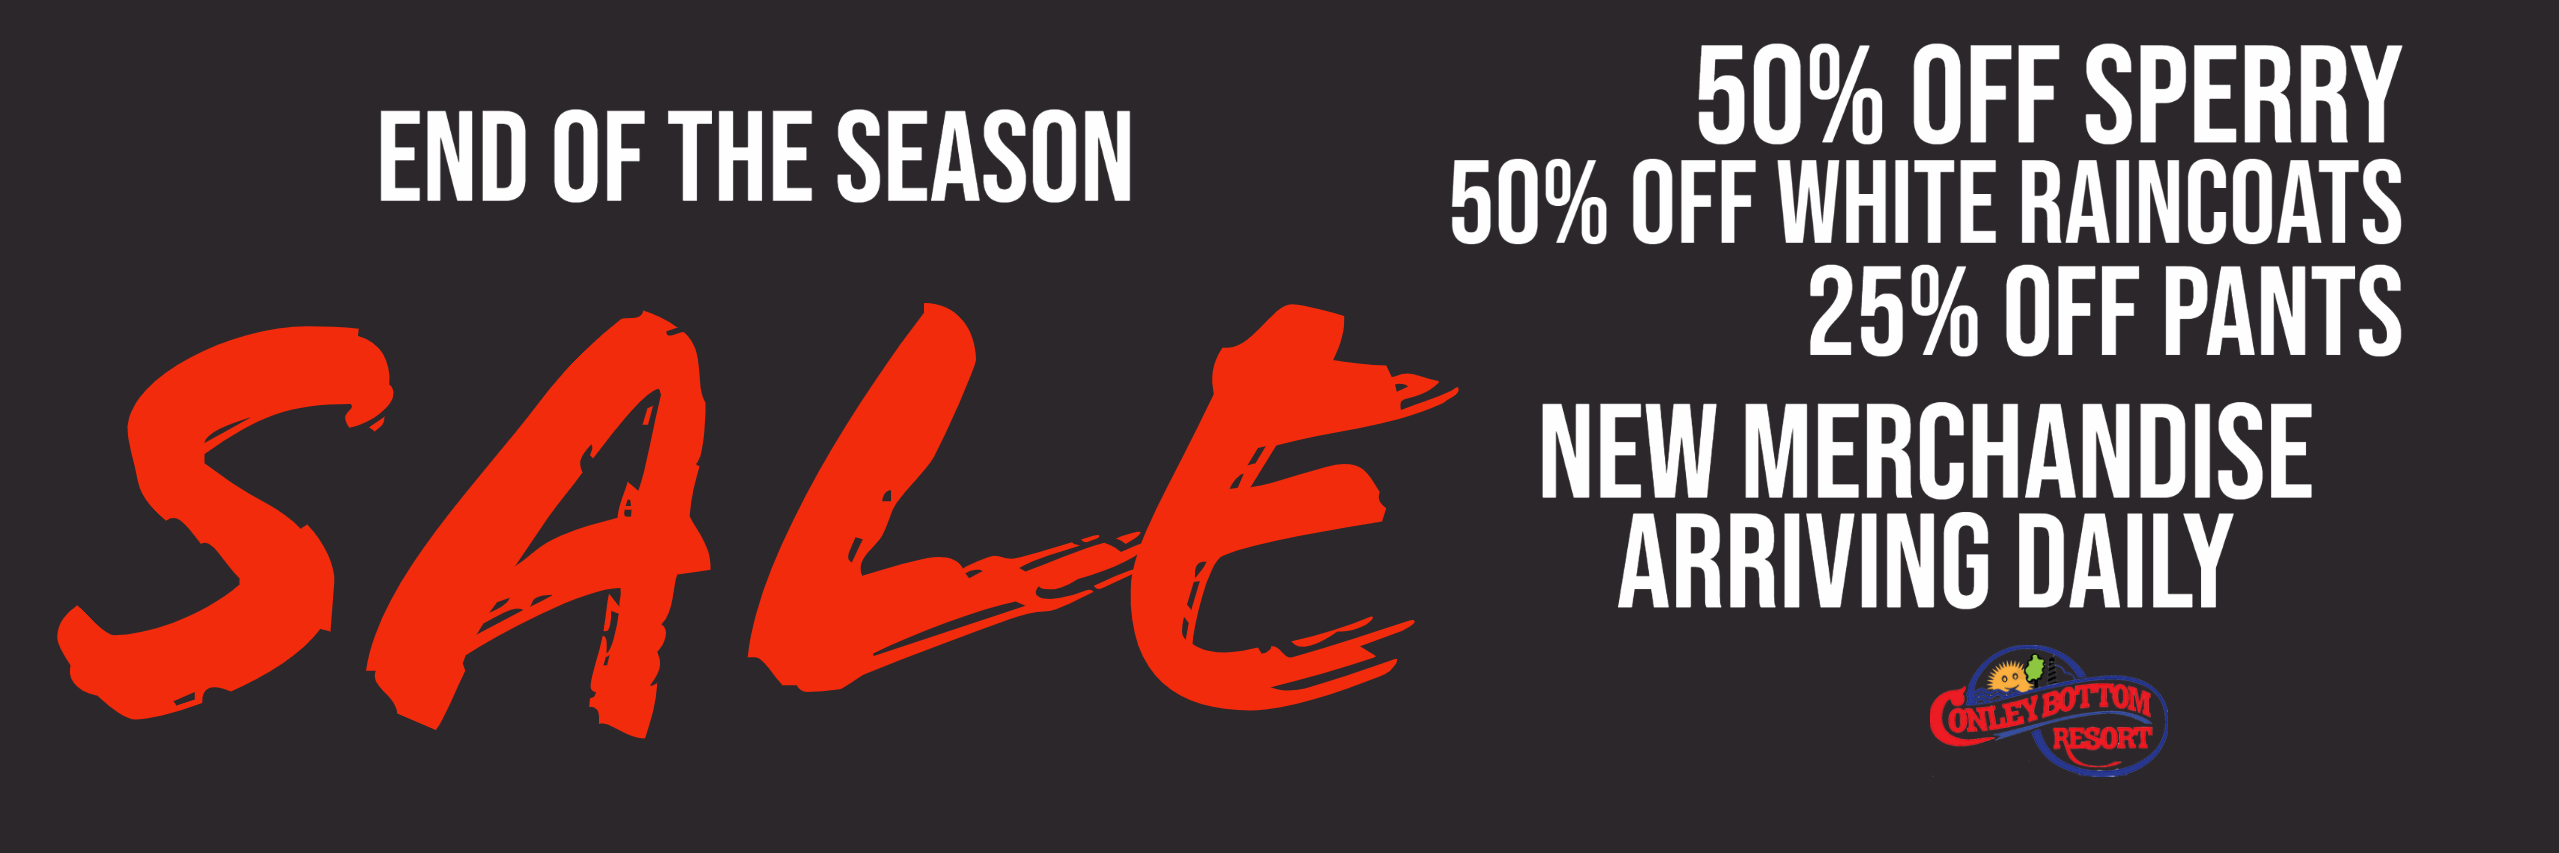 End of season sale happening now